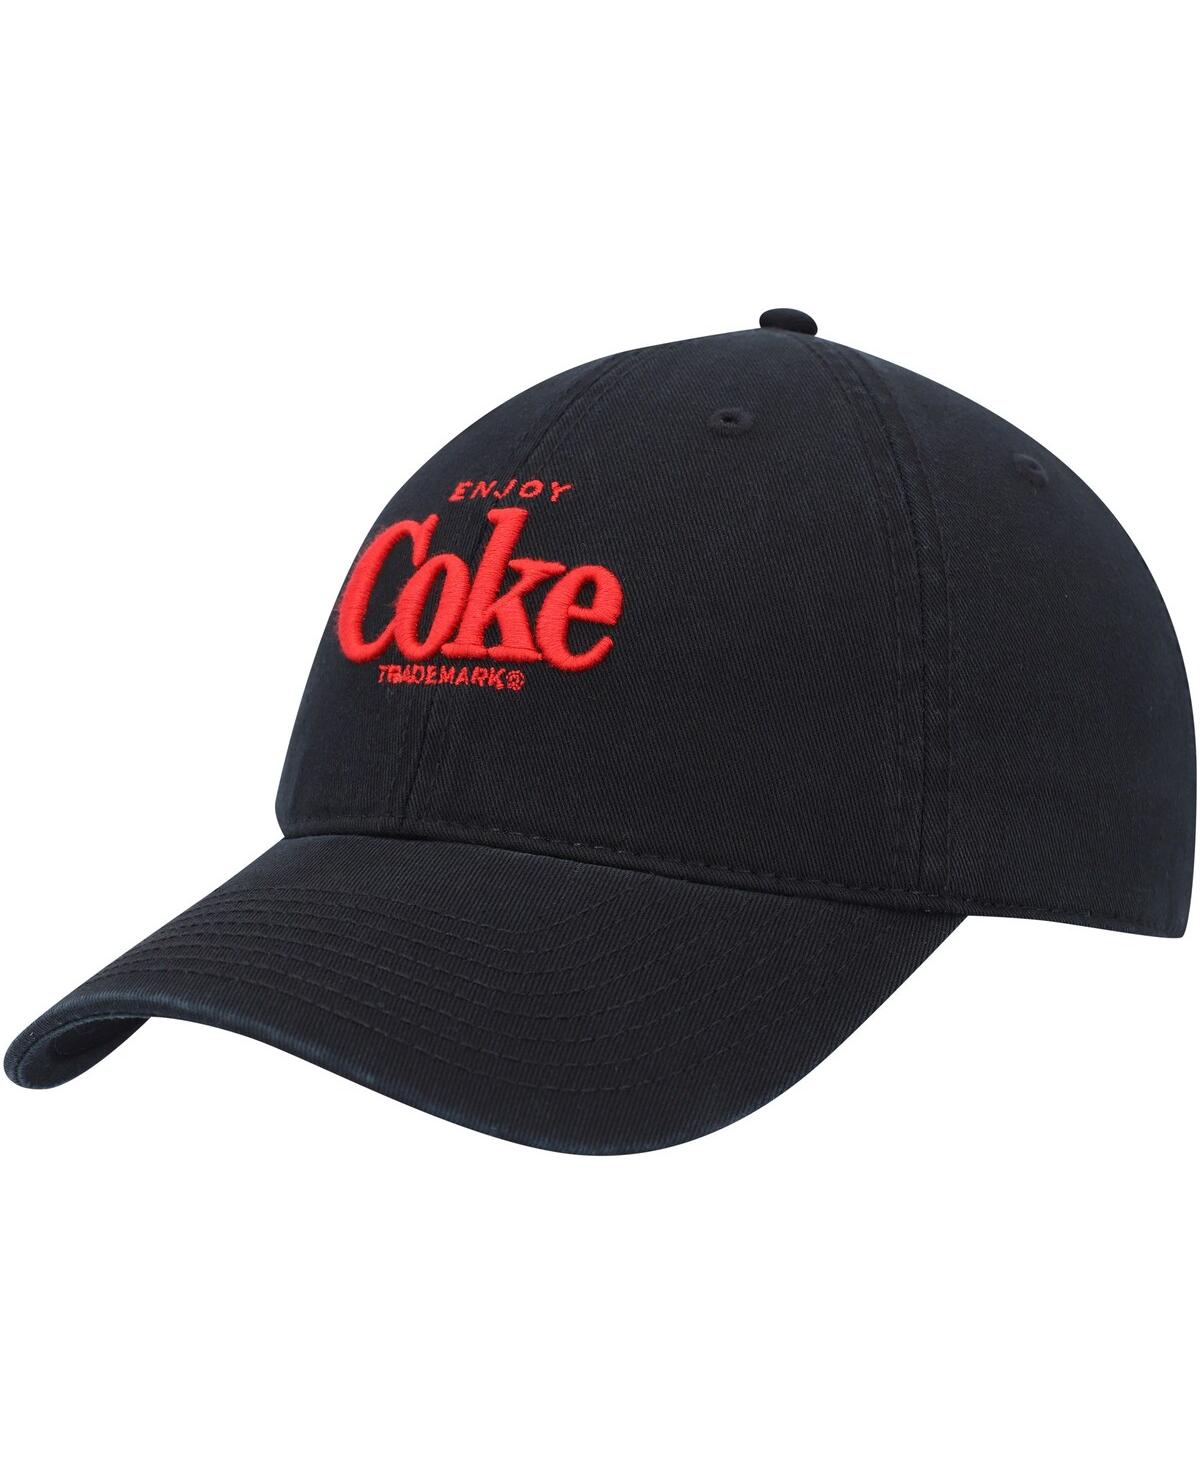 American Needle Men's  Black Coca-cola Ballpark Adjustable Hat